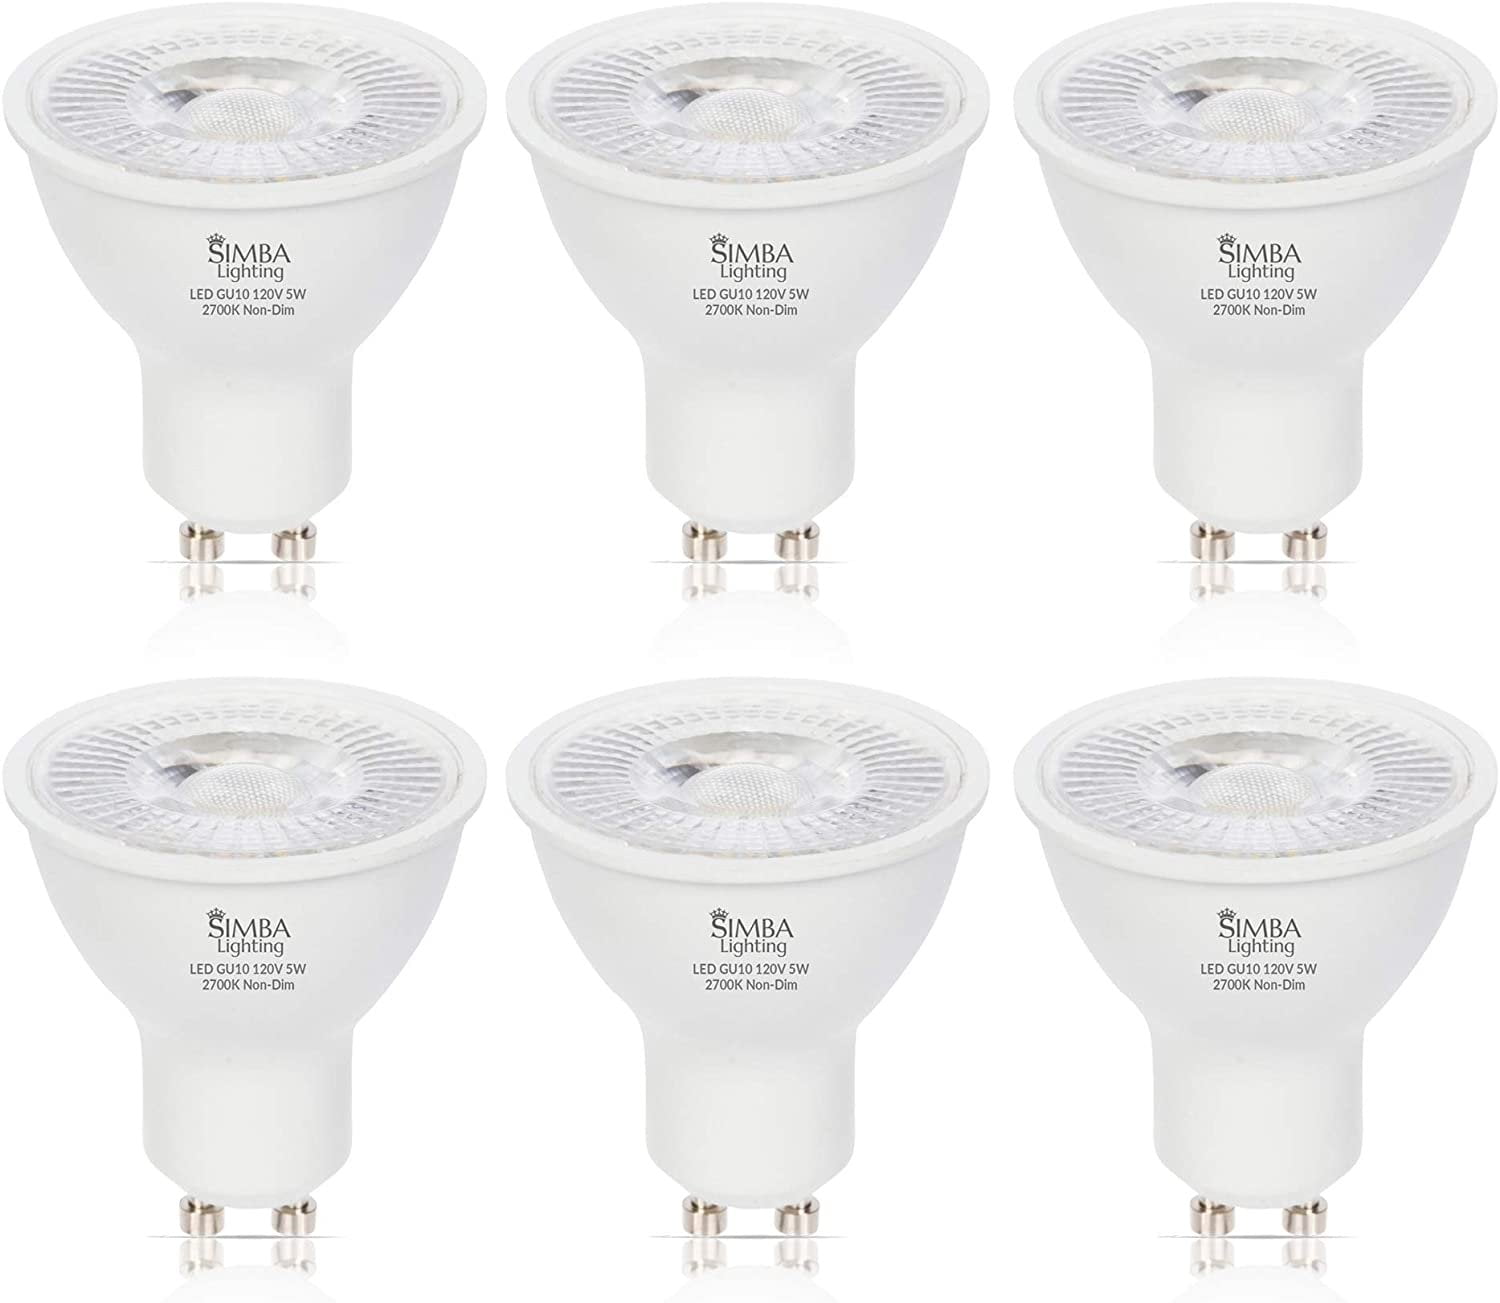 Simba Lighting LED GU10 Bulb 2700K 50W Base Replacement Spot Light 5W Twist 6-Pack Non-Dimmable 120V